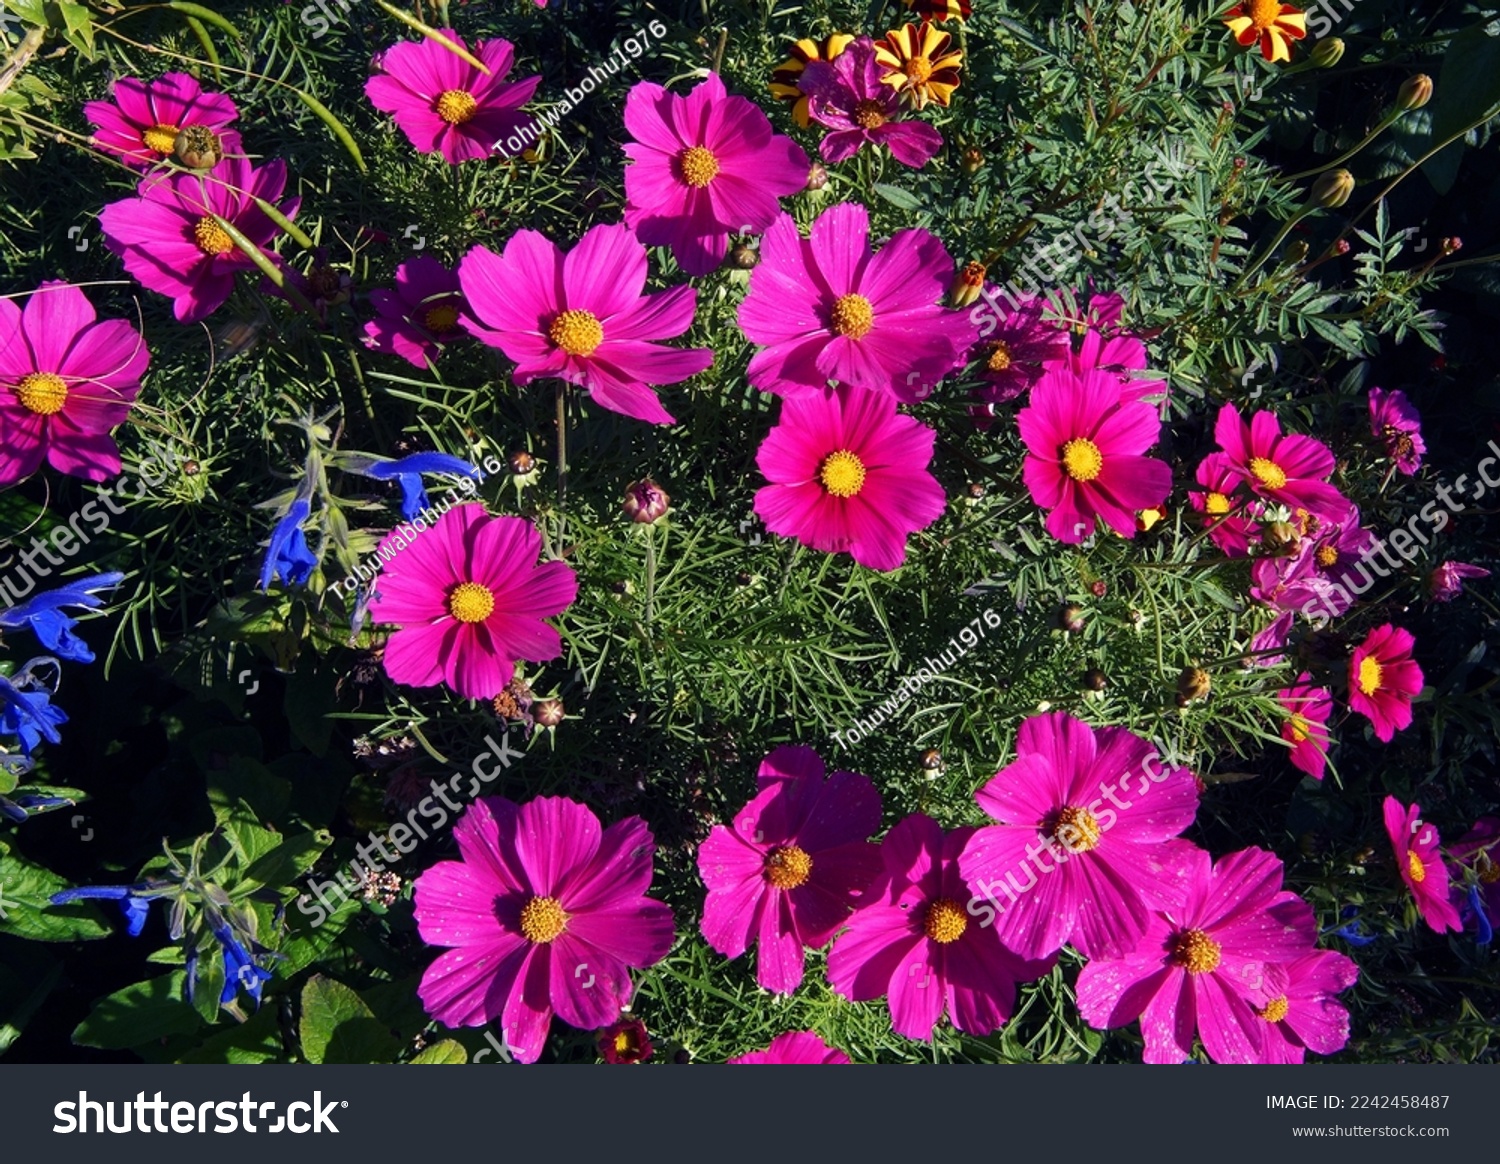         beautiful pink cosmos flowers in the garden                        #2242458487